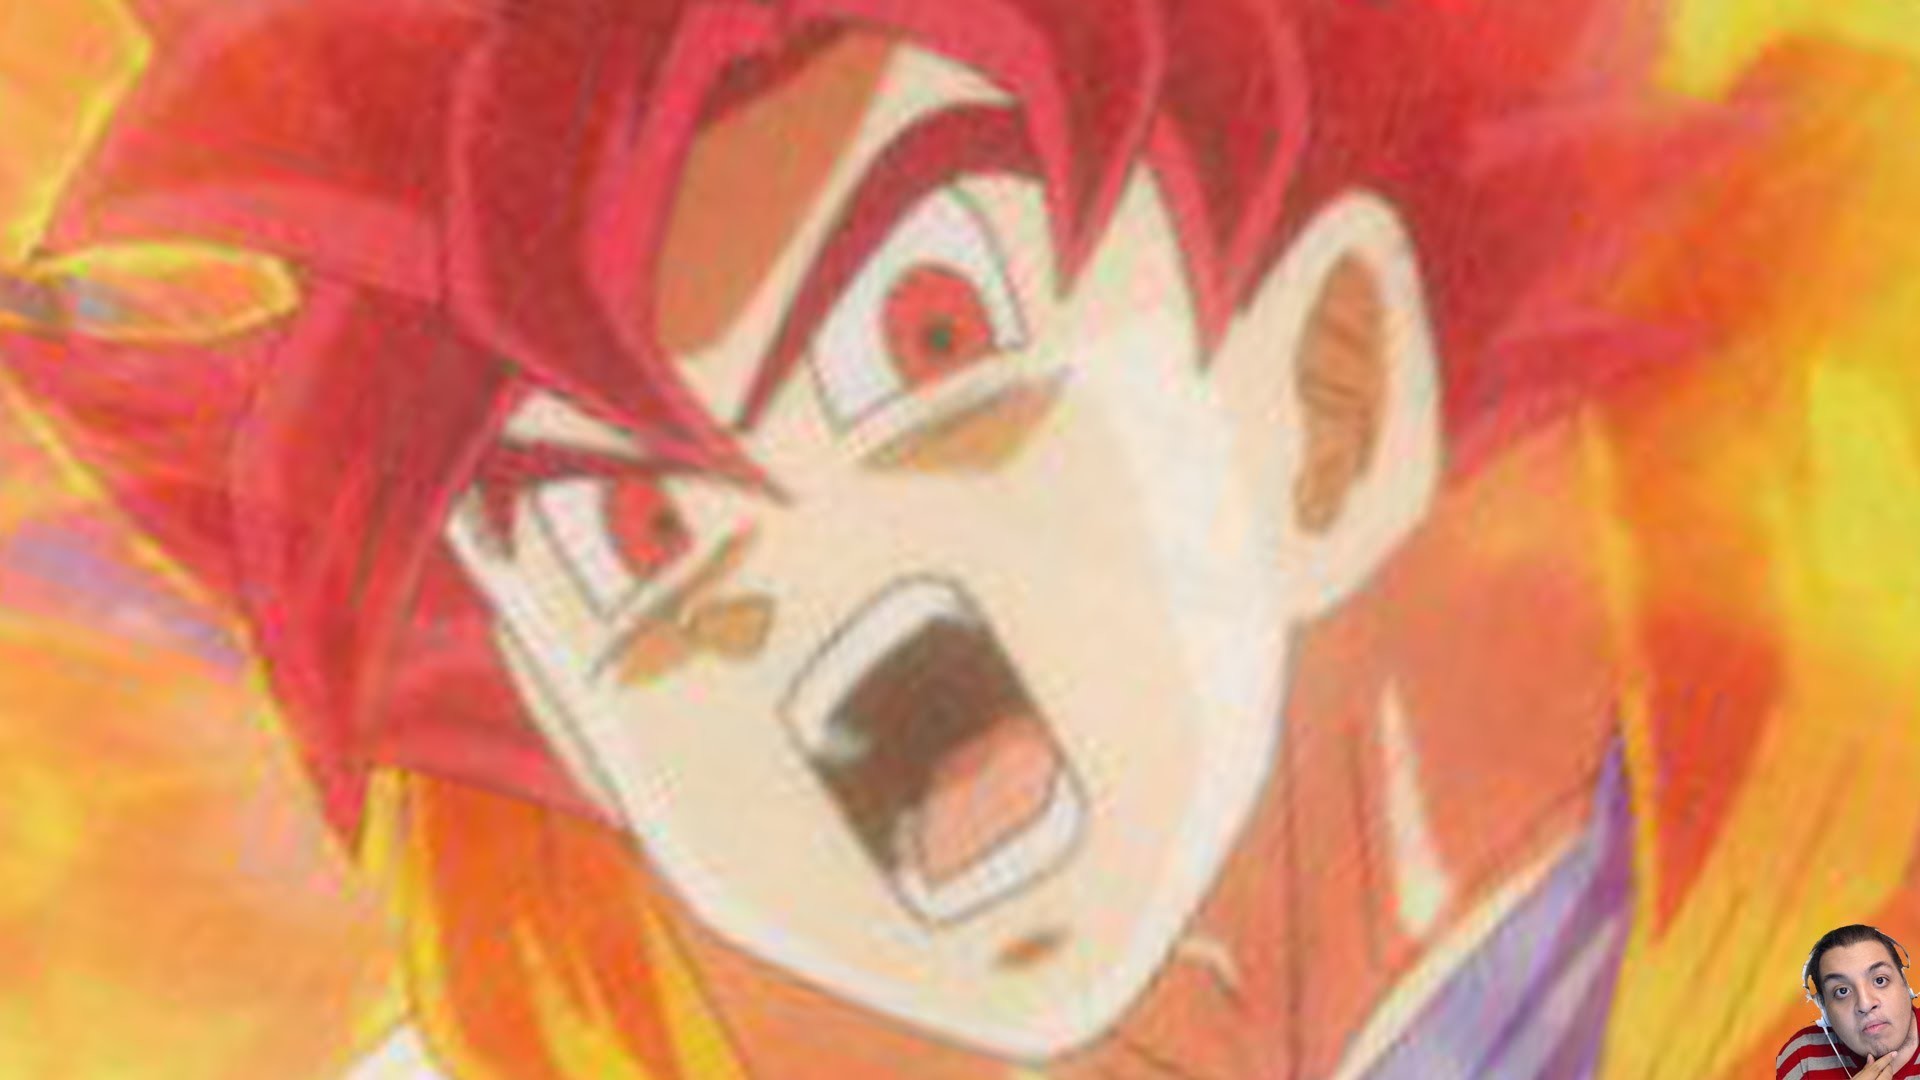 1920x1080 Goku Super Saiyan God Mode Revealed & DBZ Battle of Gods Gohan Vs Bills  Trailer (Reaction) - YouTube